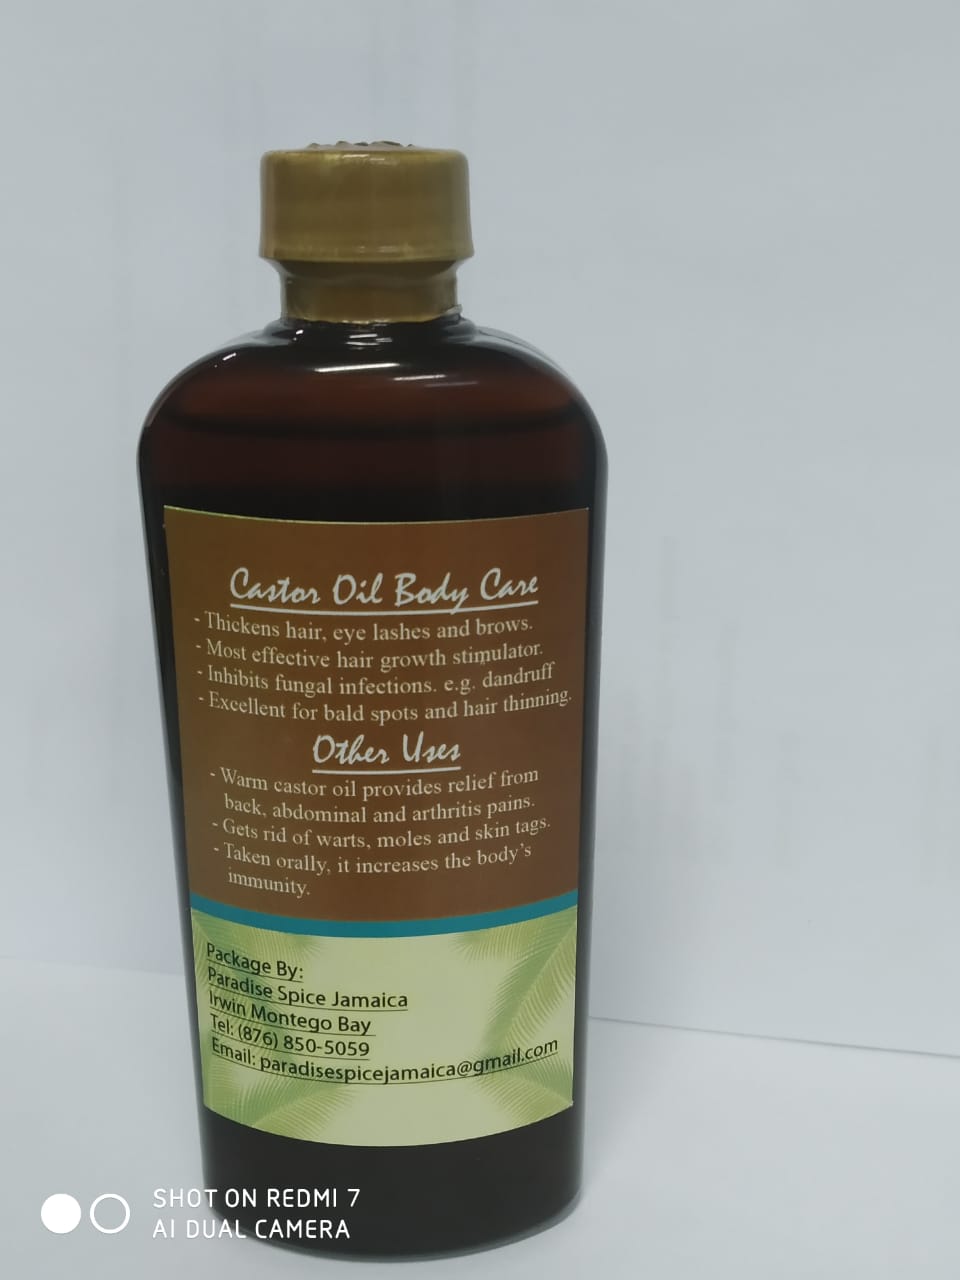 Pure Jamaican Black castor oil 4 oz